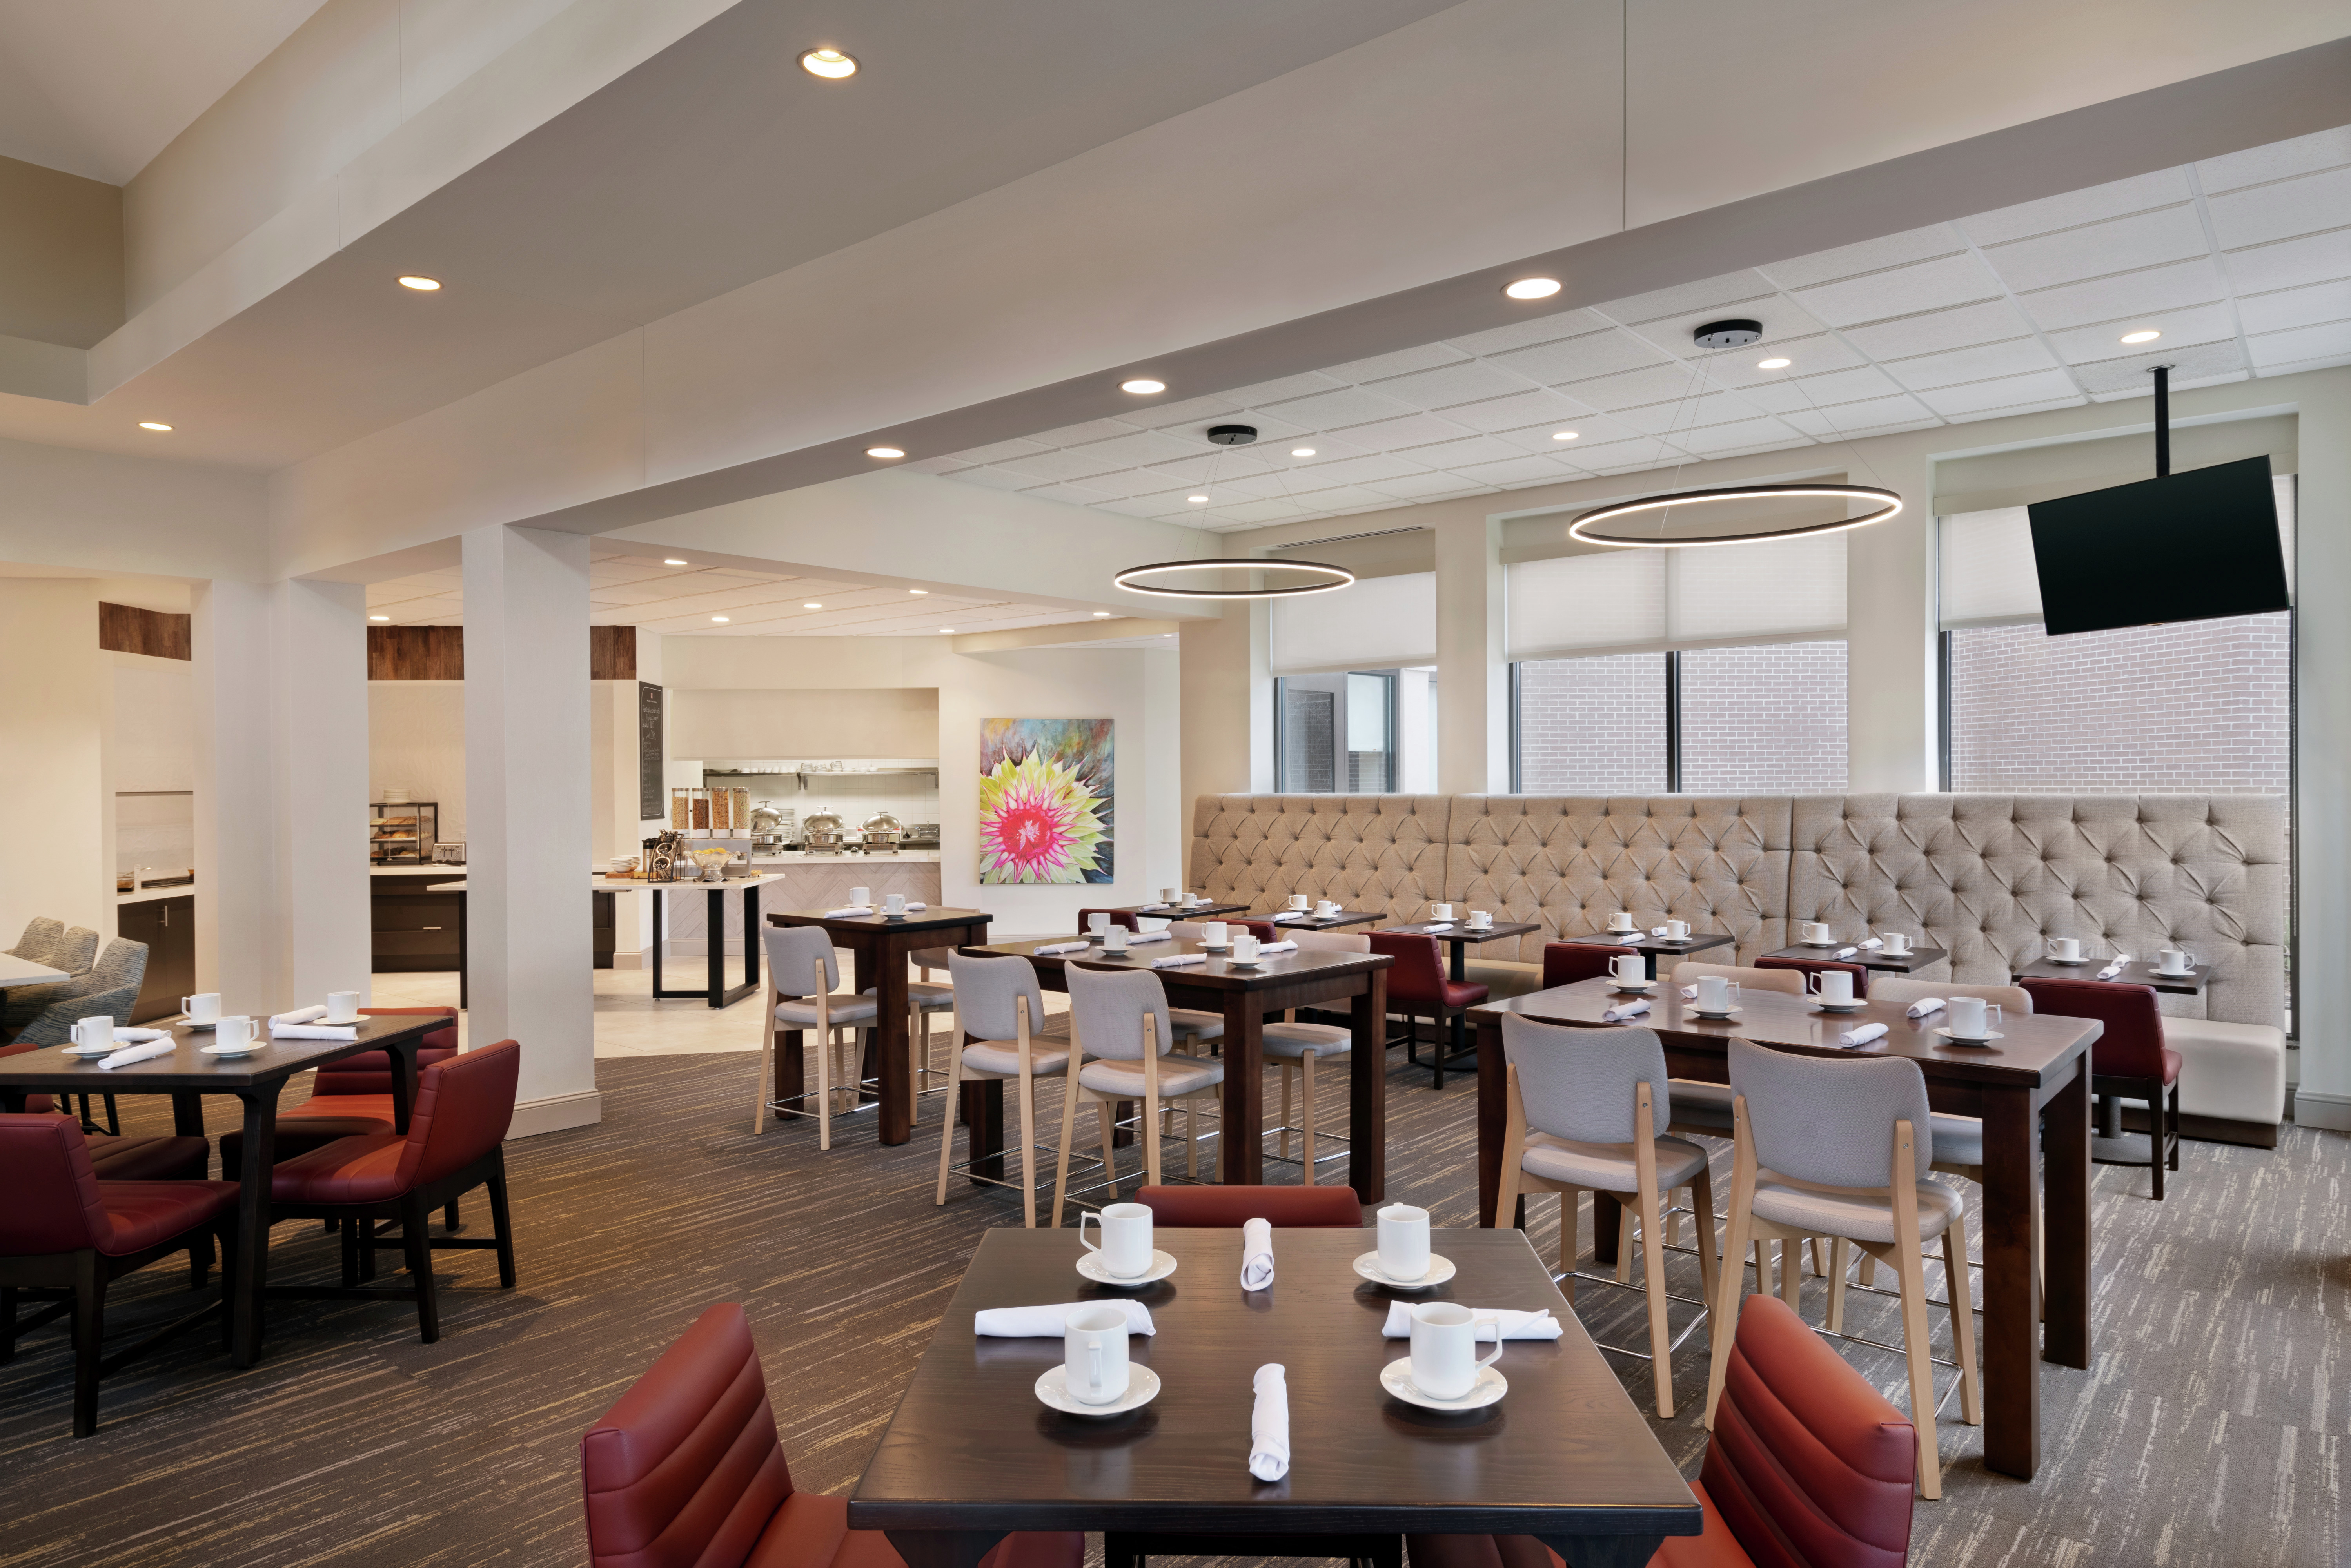 Hilton Garden Inn Restaurant with Tables, Chairs, and Room Technology